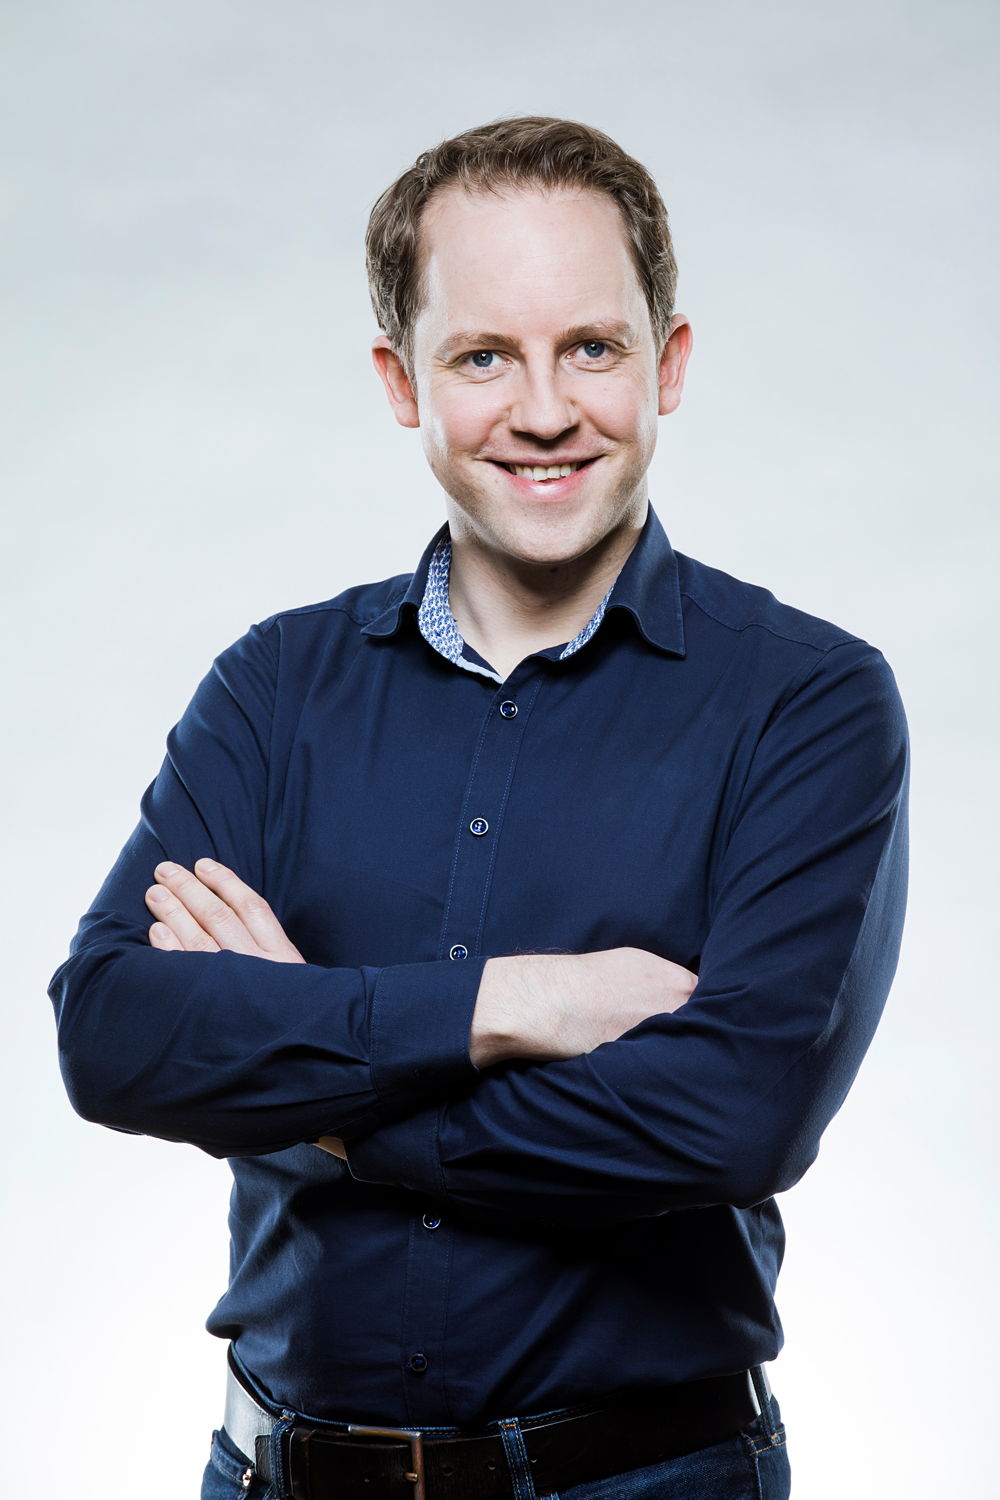 InnoGames Co-founder and CEO Hendrik Klindworth